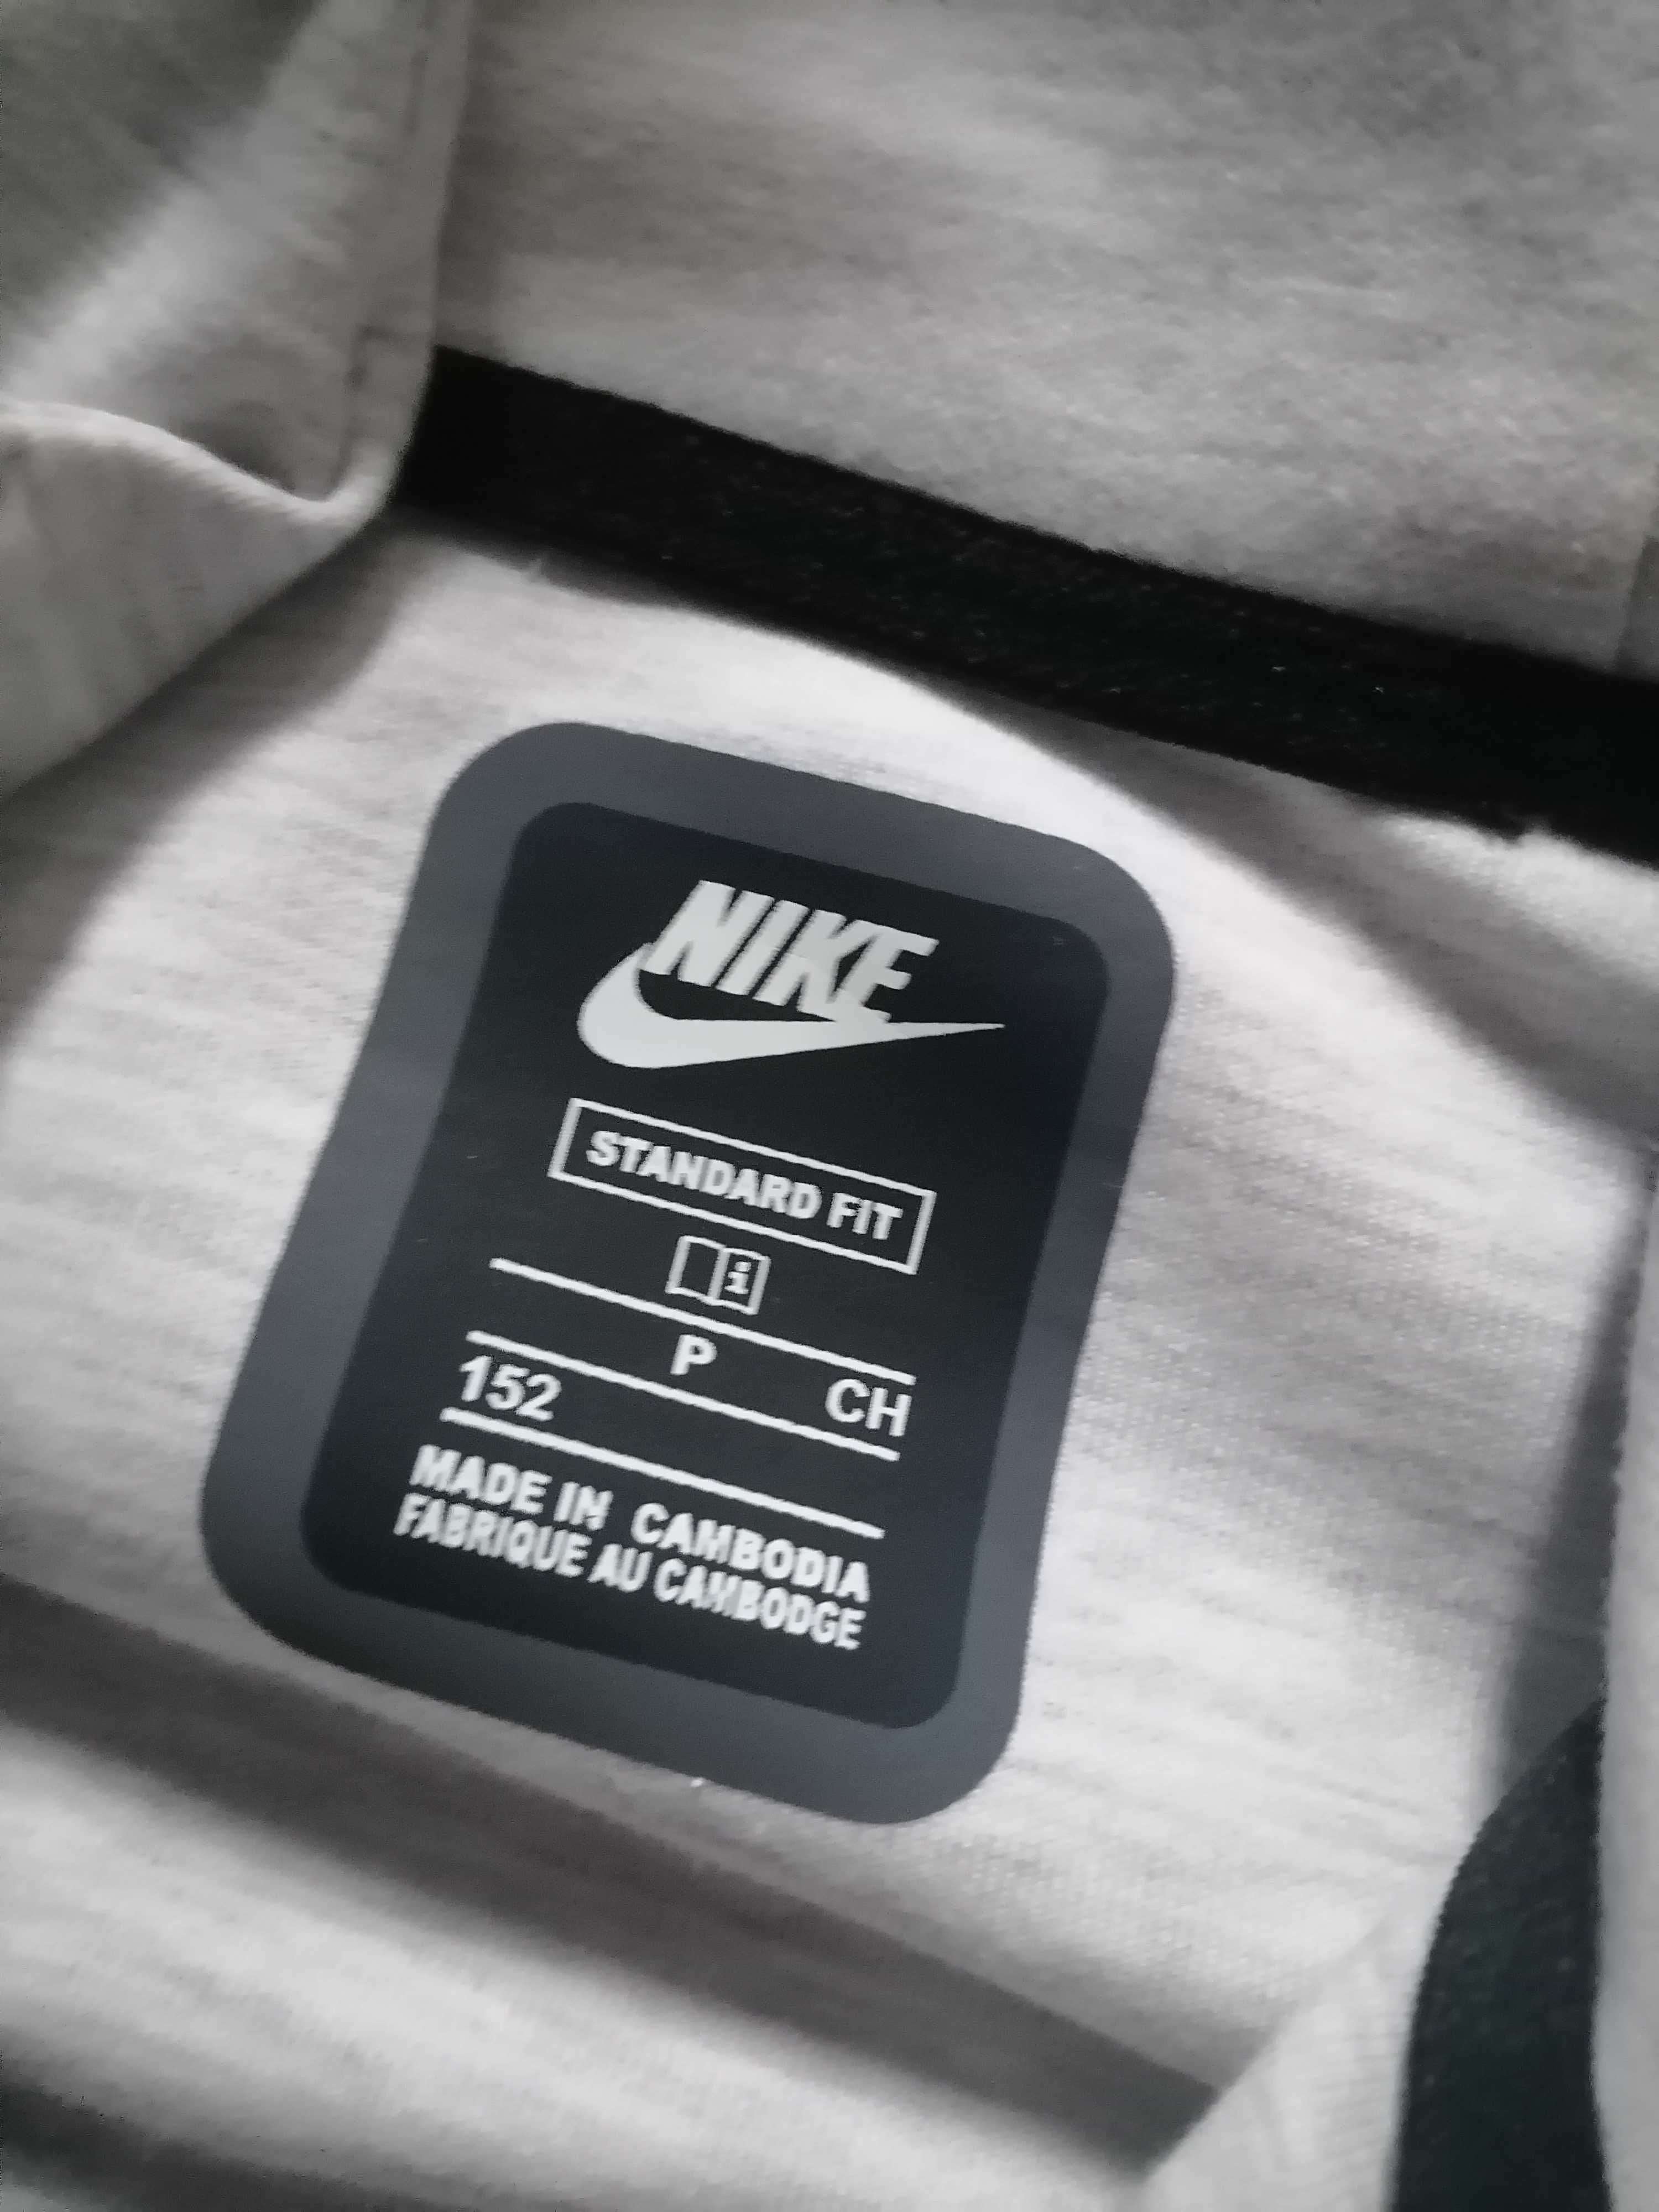 Nike tech gri mărime 152